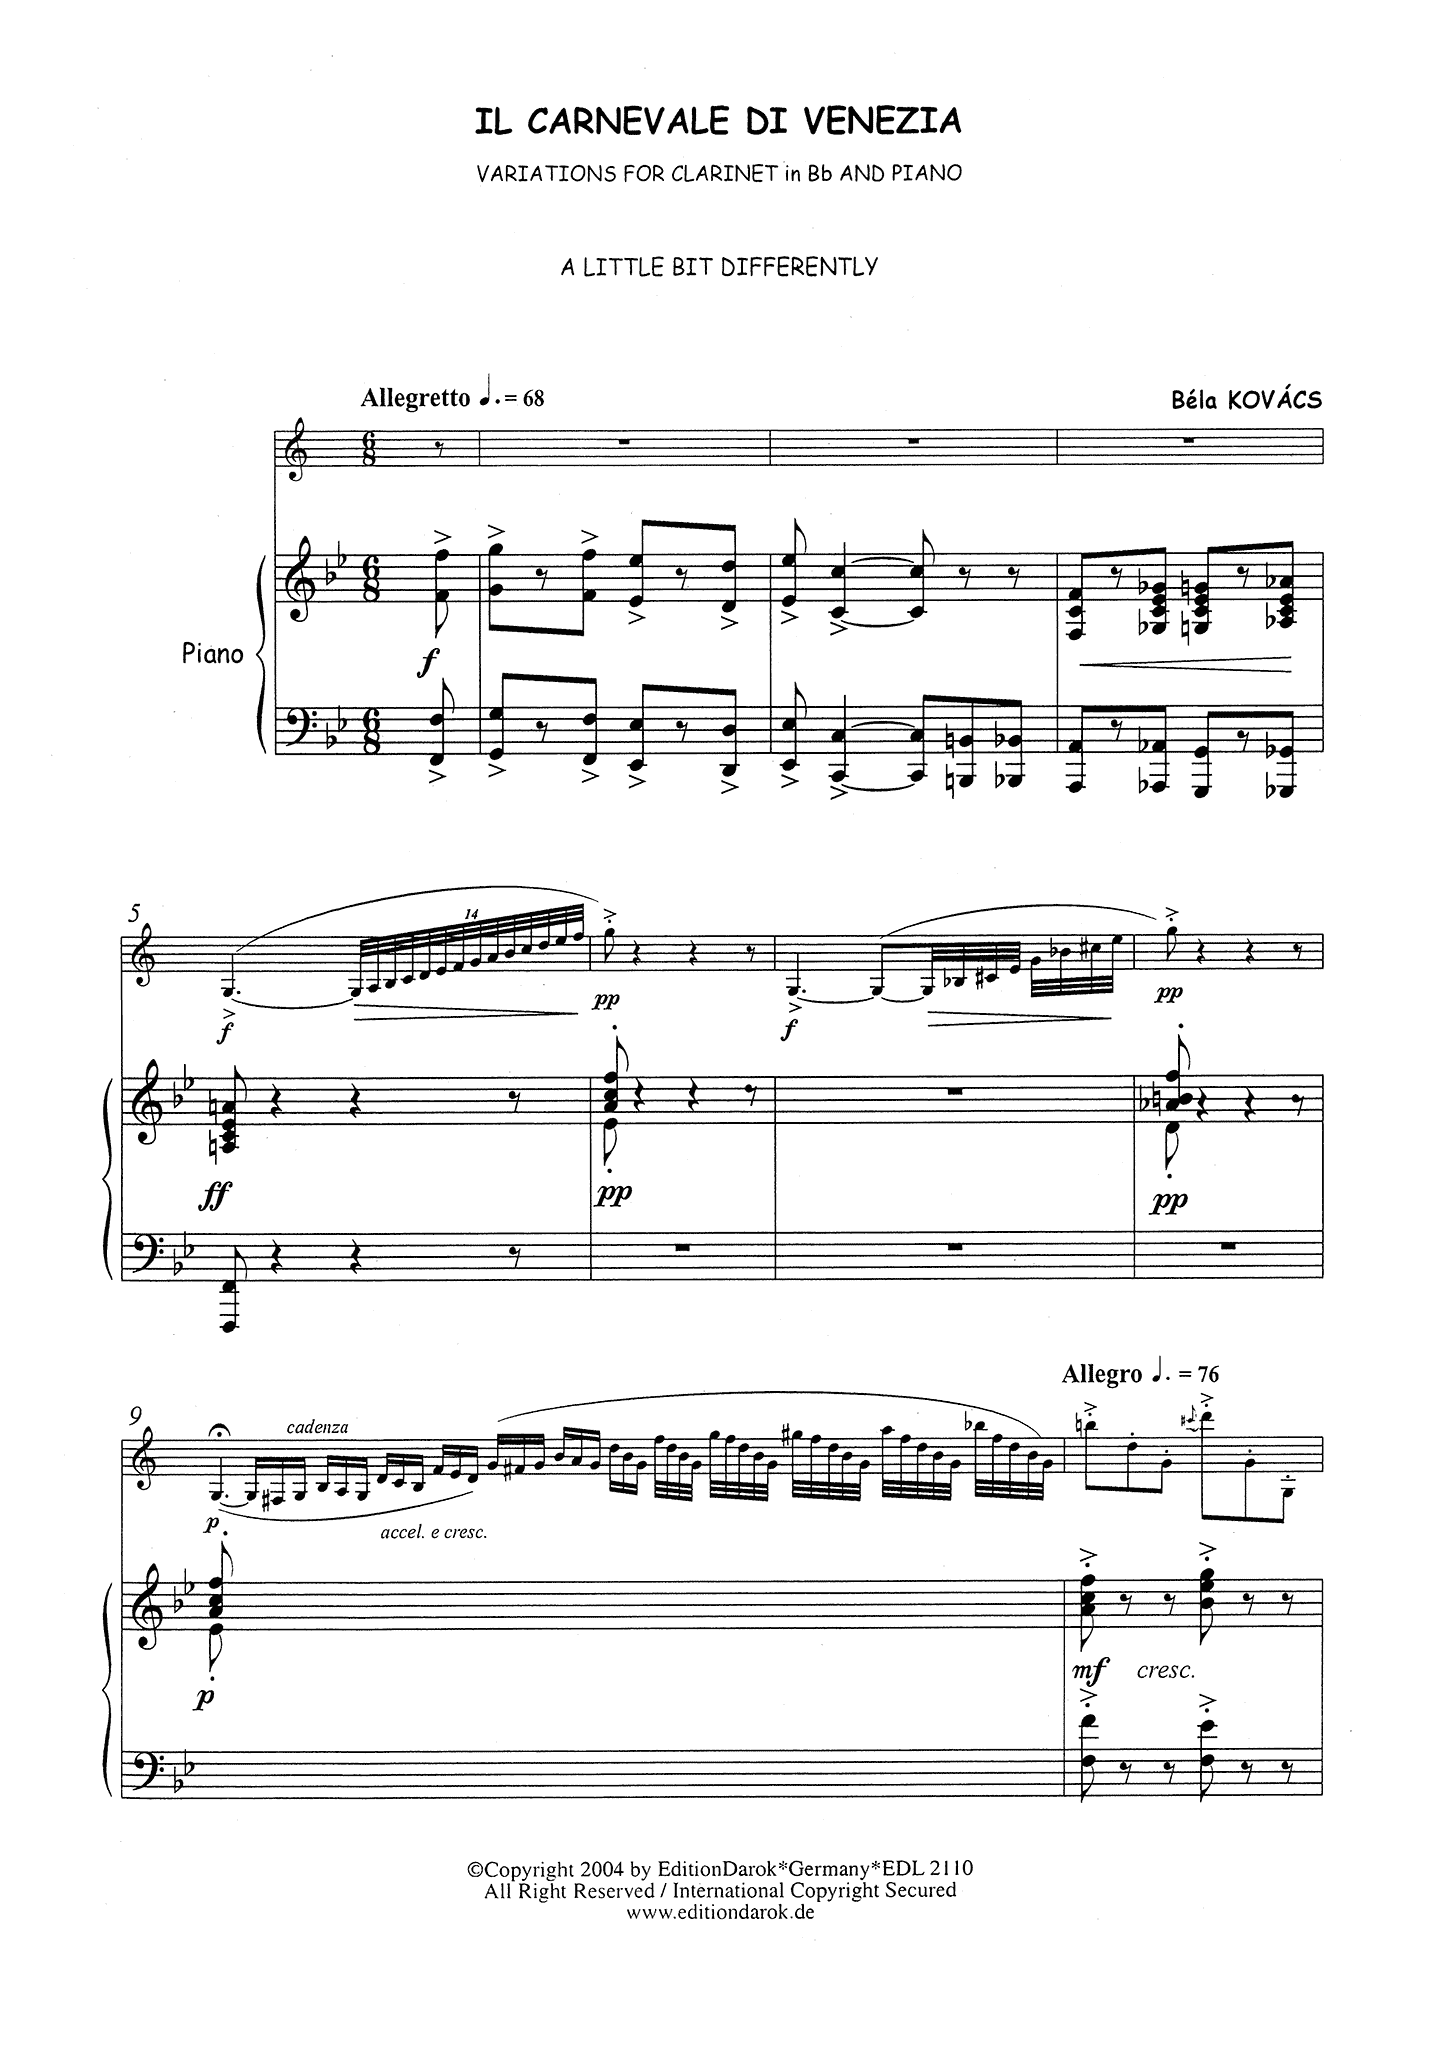 Carnevale de Venezia Score